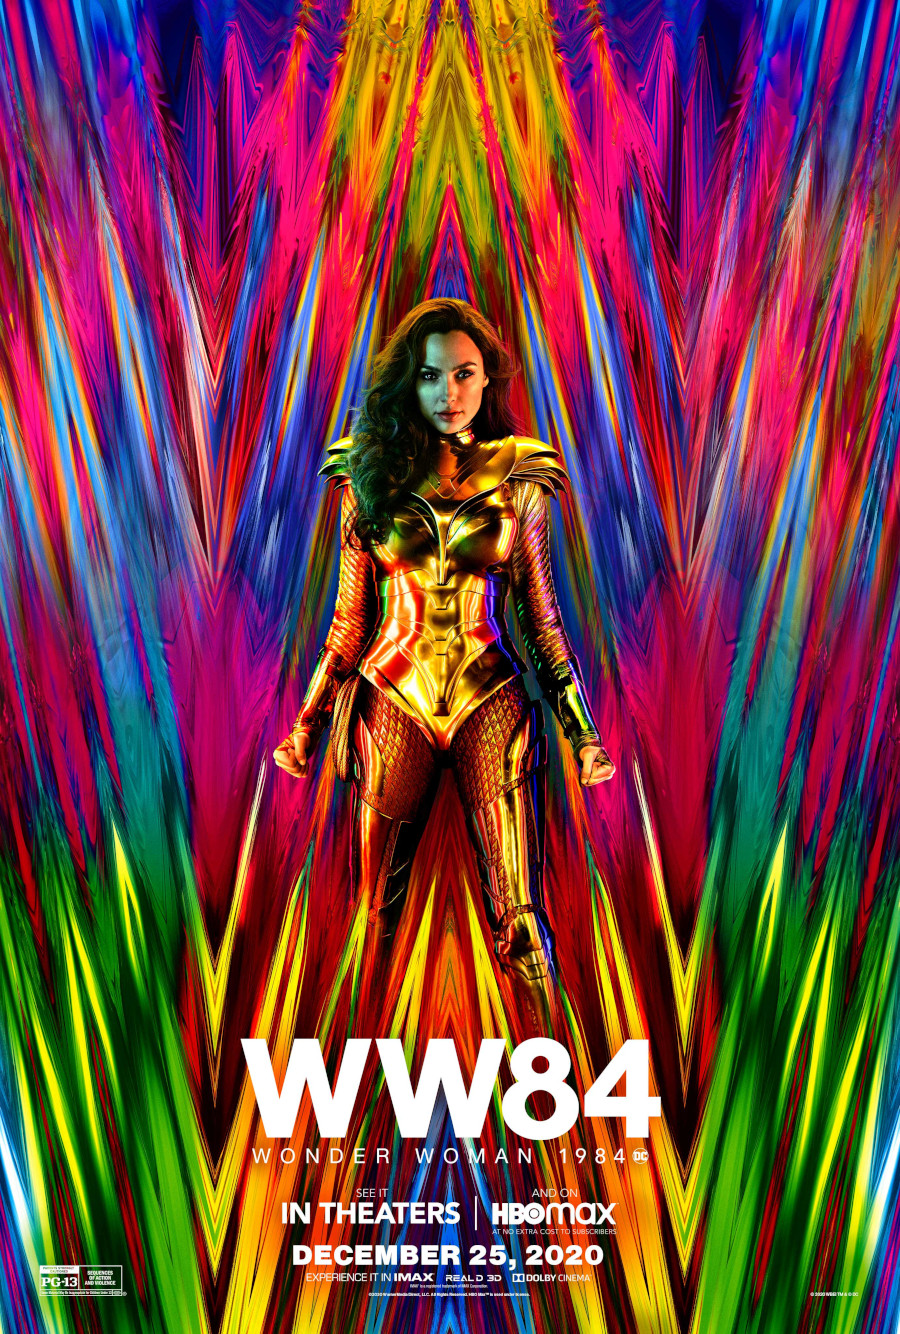 Wonder Woman 1984 Gal Gadot poster release date